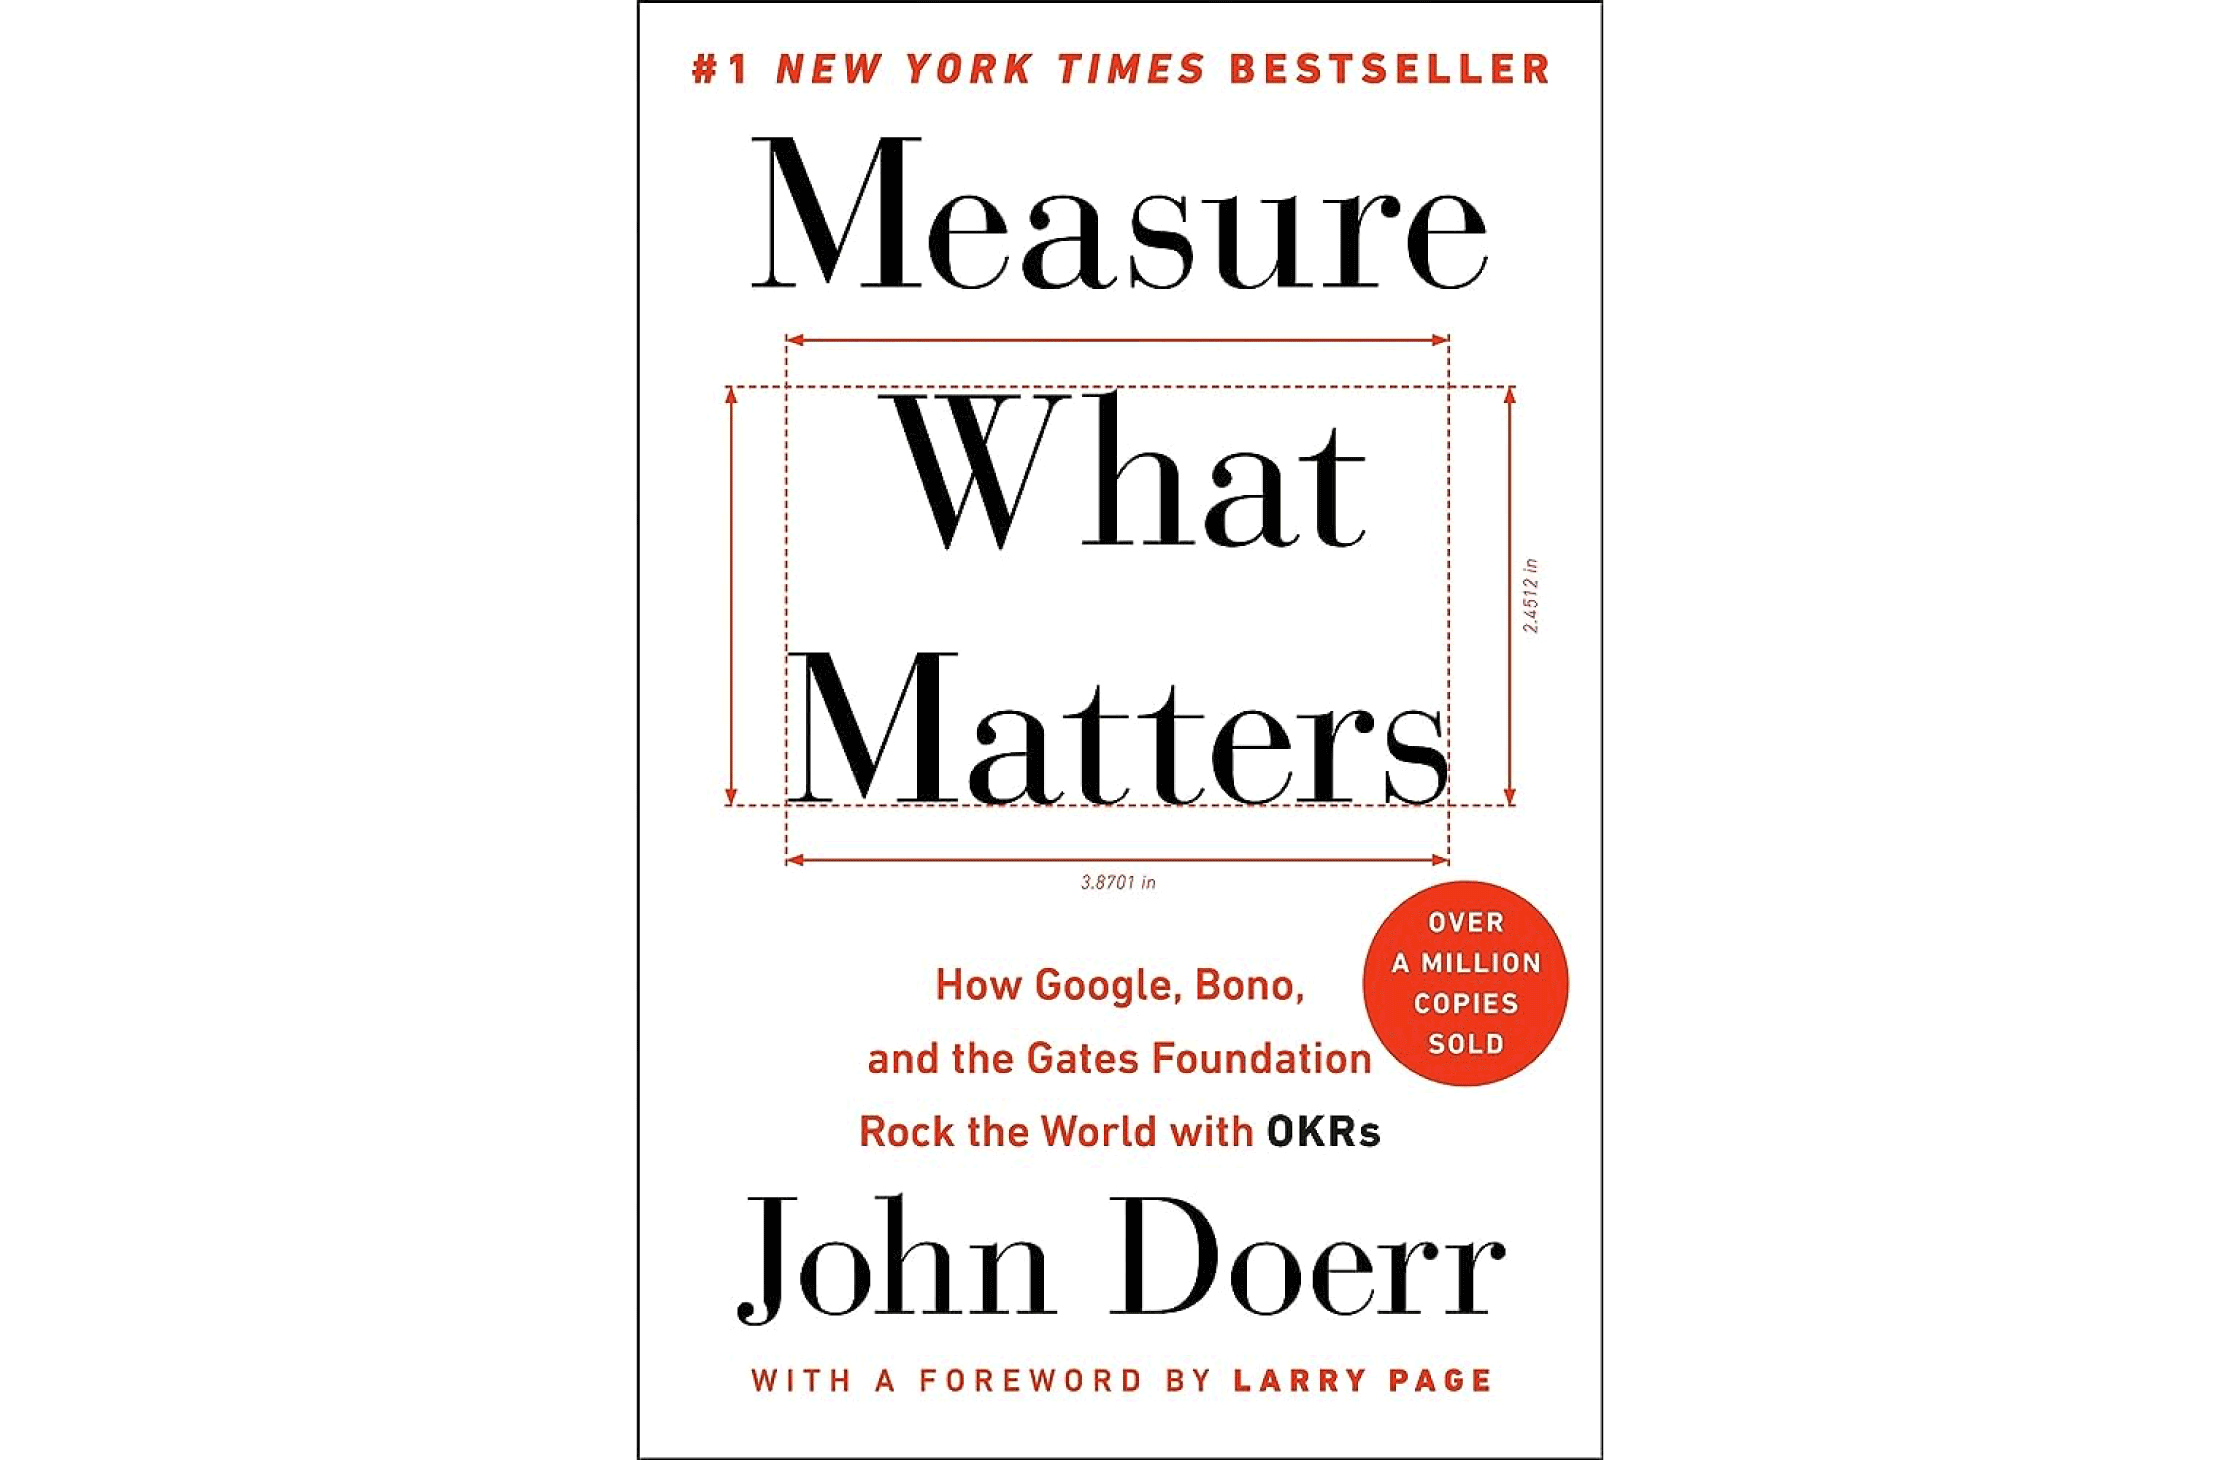 Summary: Measure What Matters by John Doerr